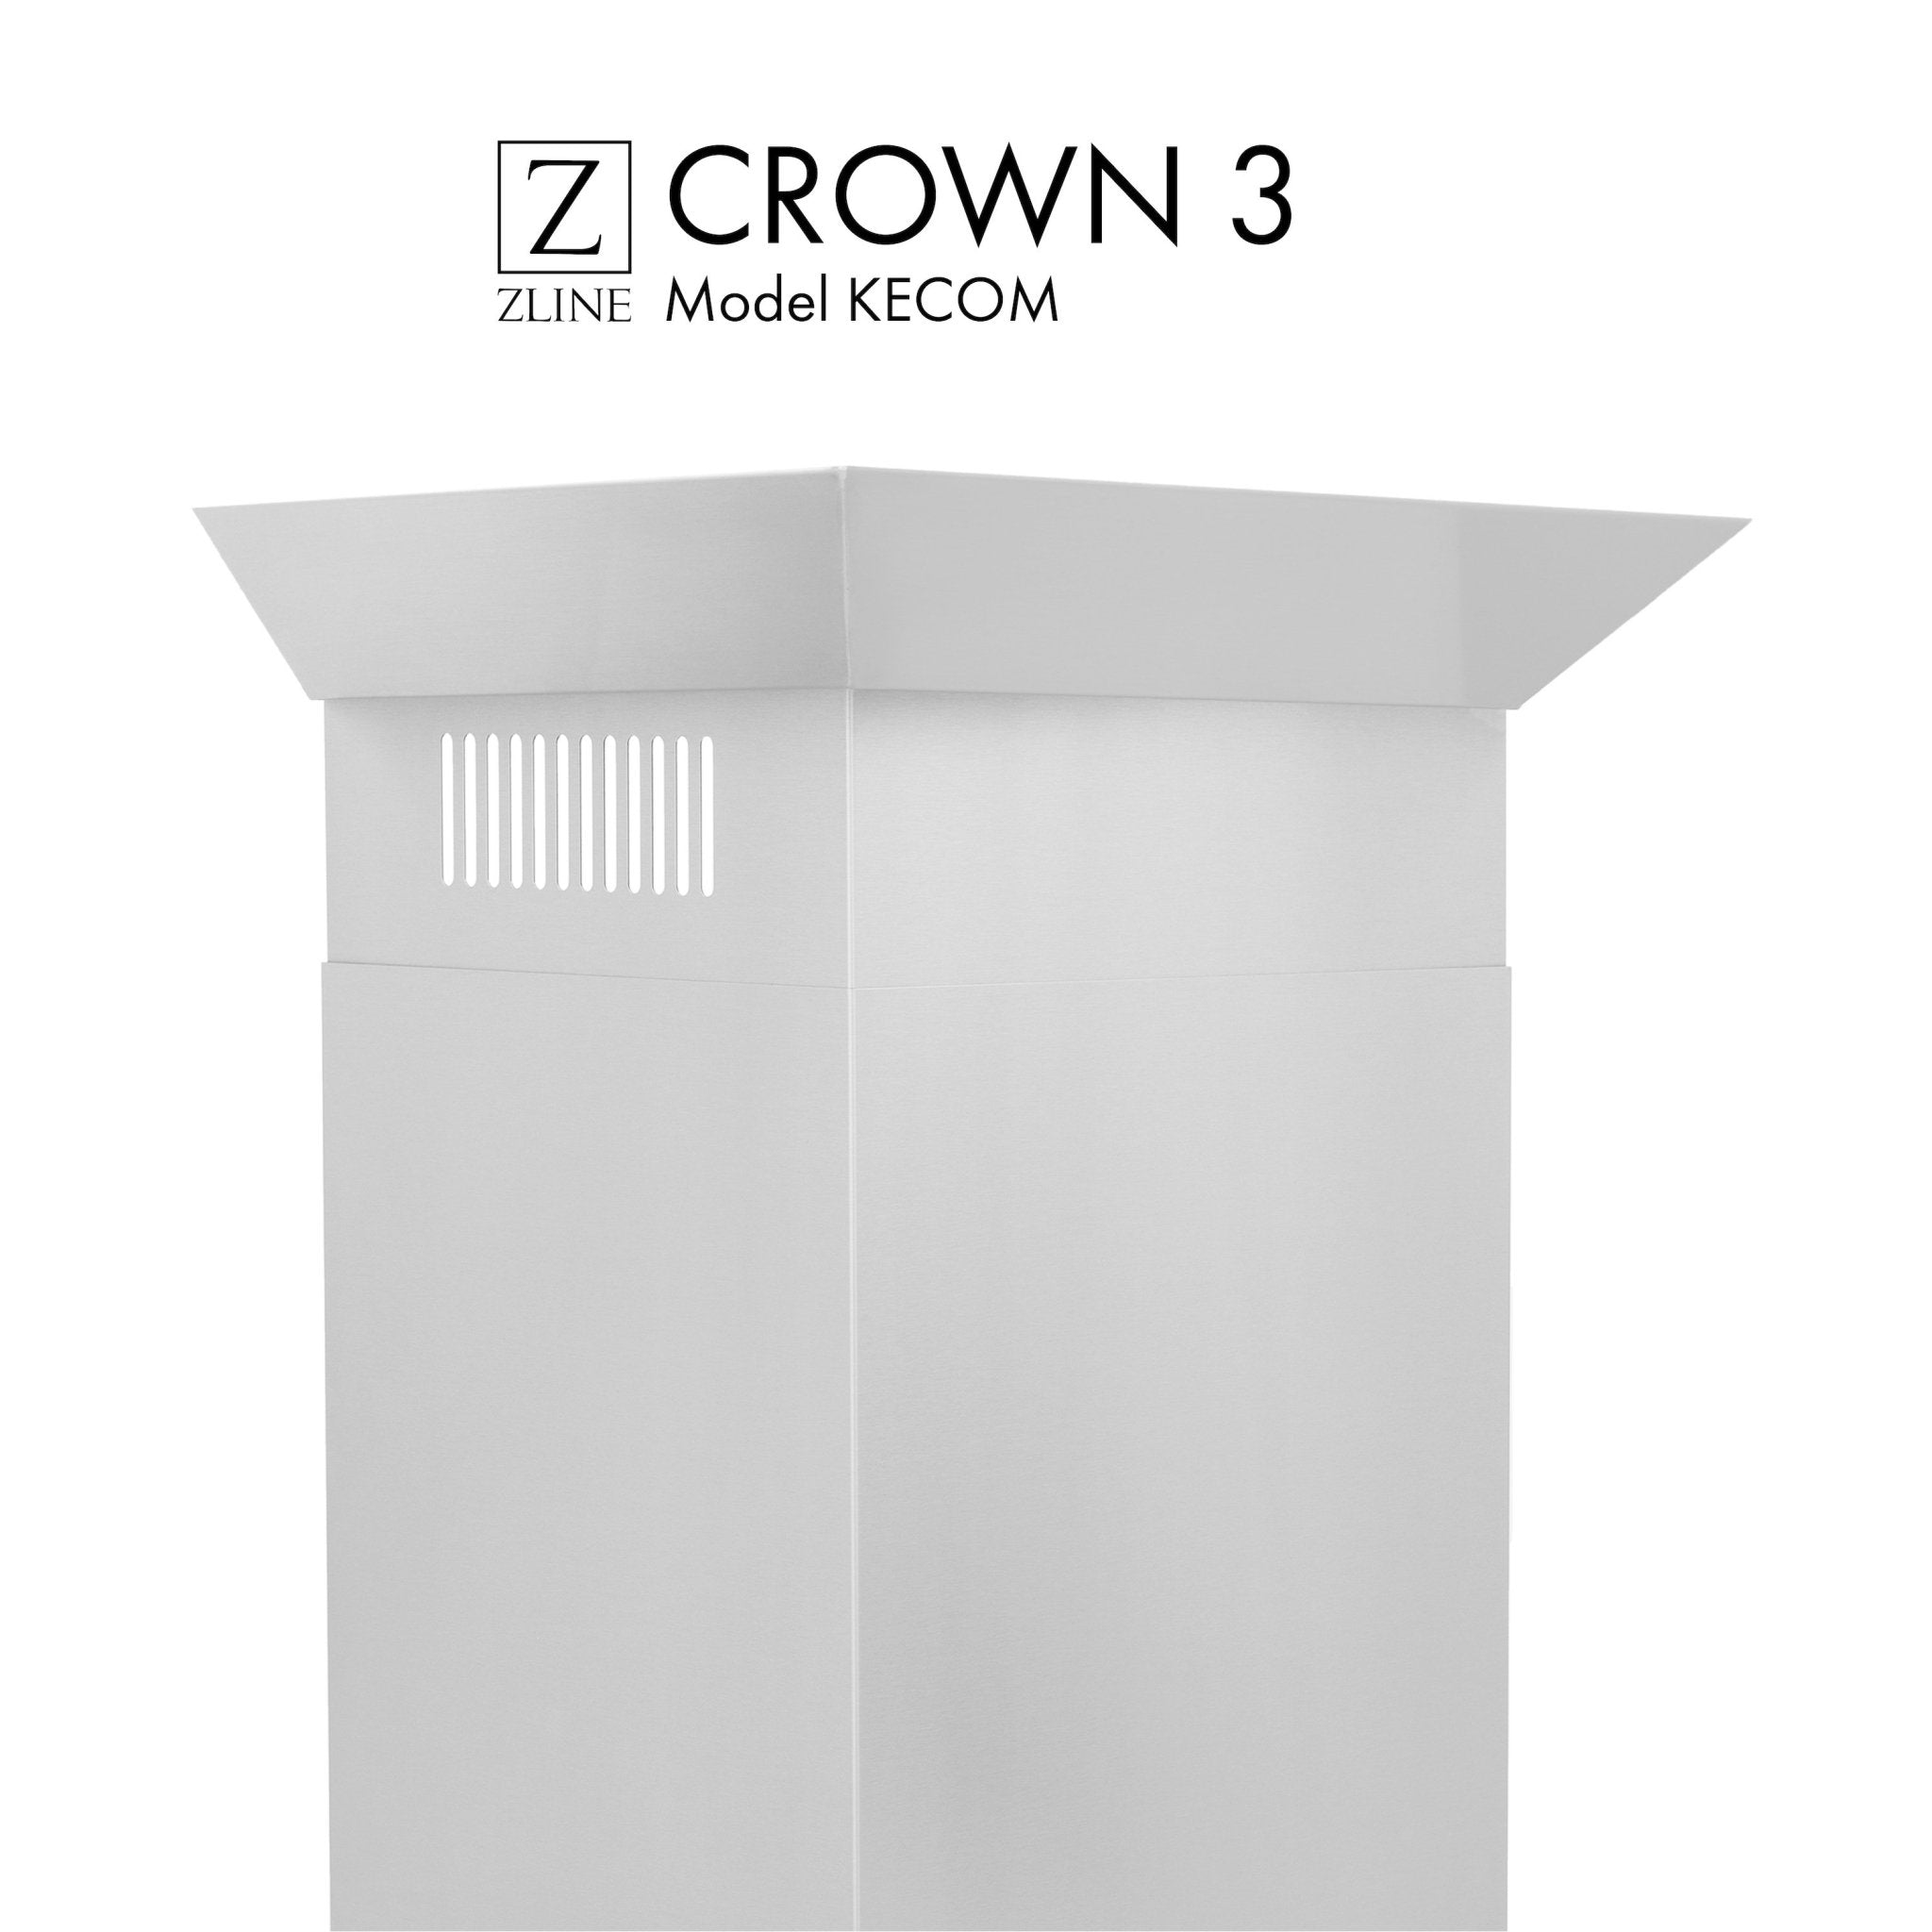 ZLINE Crown Molding #3 For Wall Range Hood (CM3-KECOM) - Rustic Kitchen & Bath - Range Hood Accessories - ZLINE Kitchen and Bath